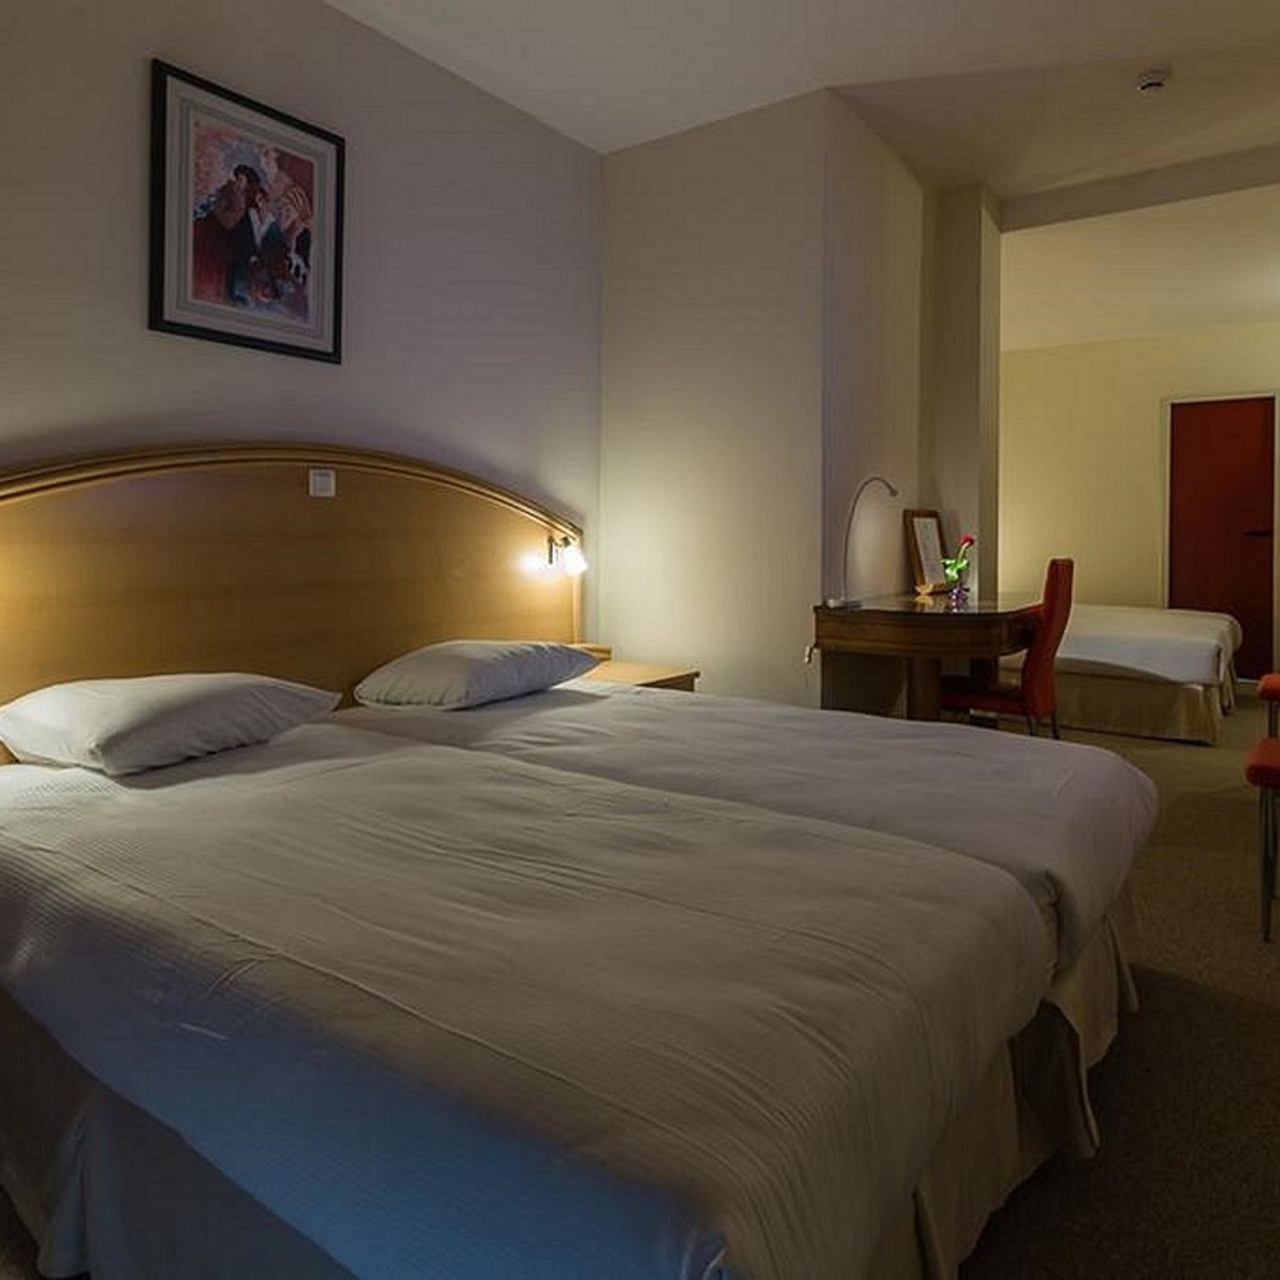 Slina Hotel Brussels - Anderlecht chez HRS avec services gratuits